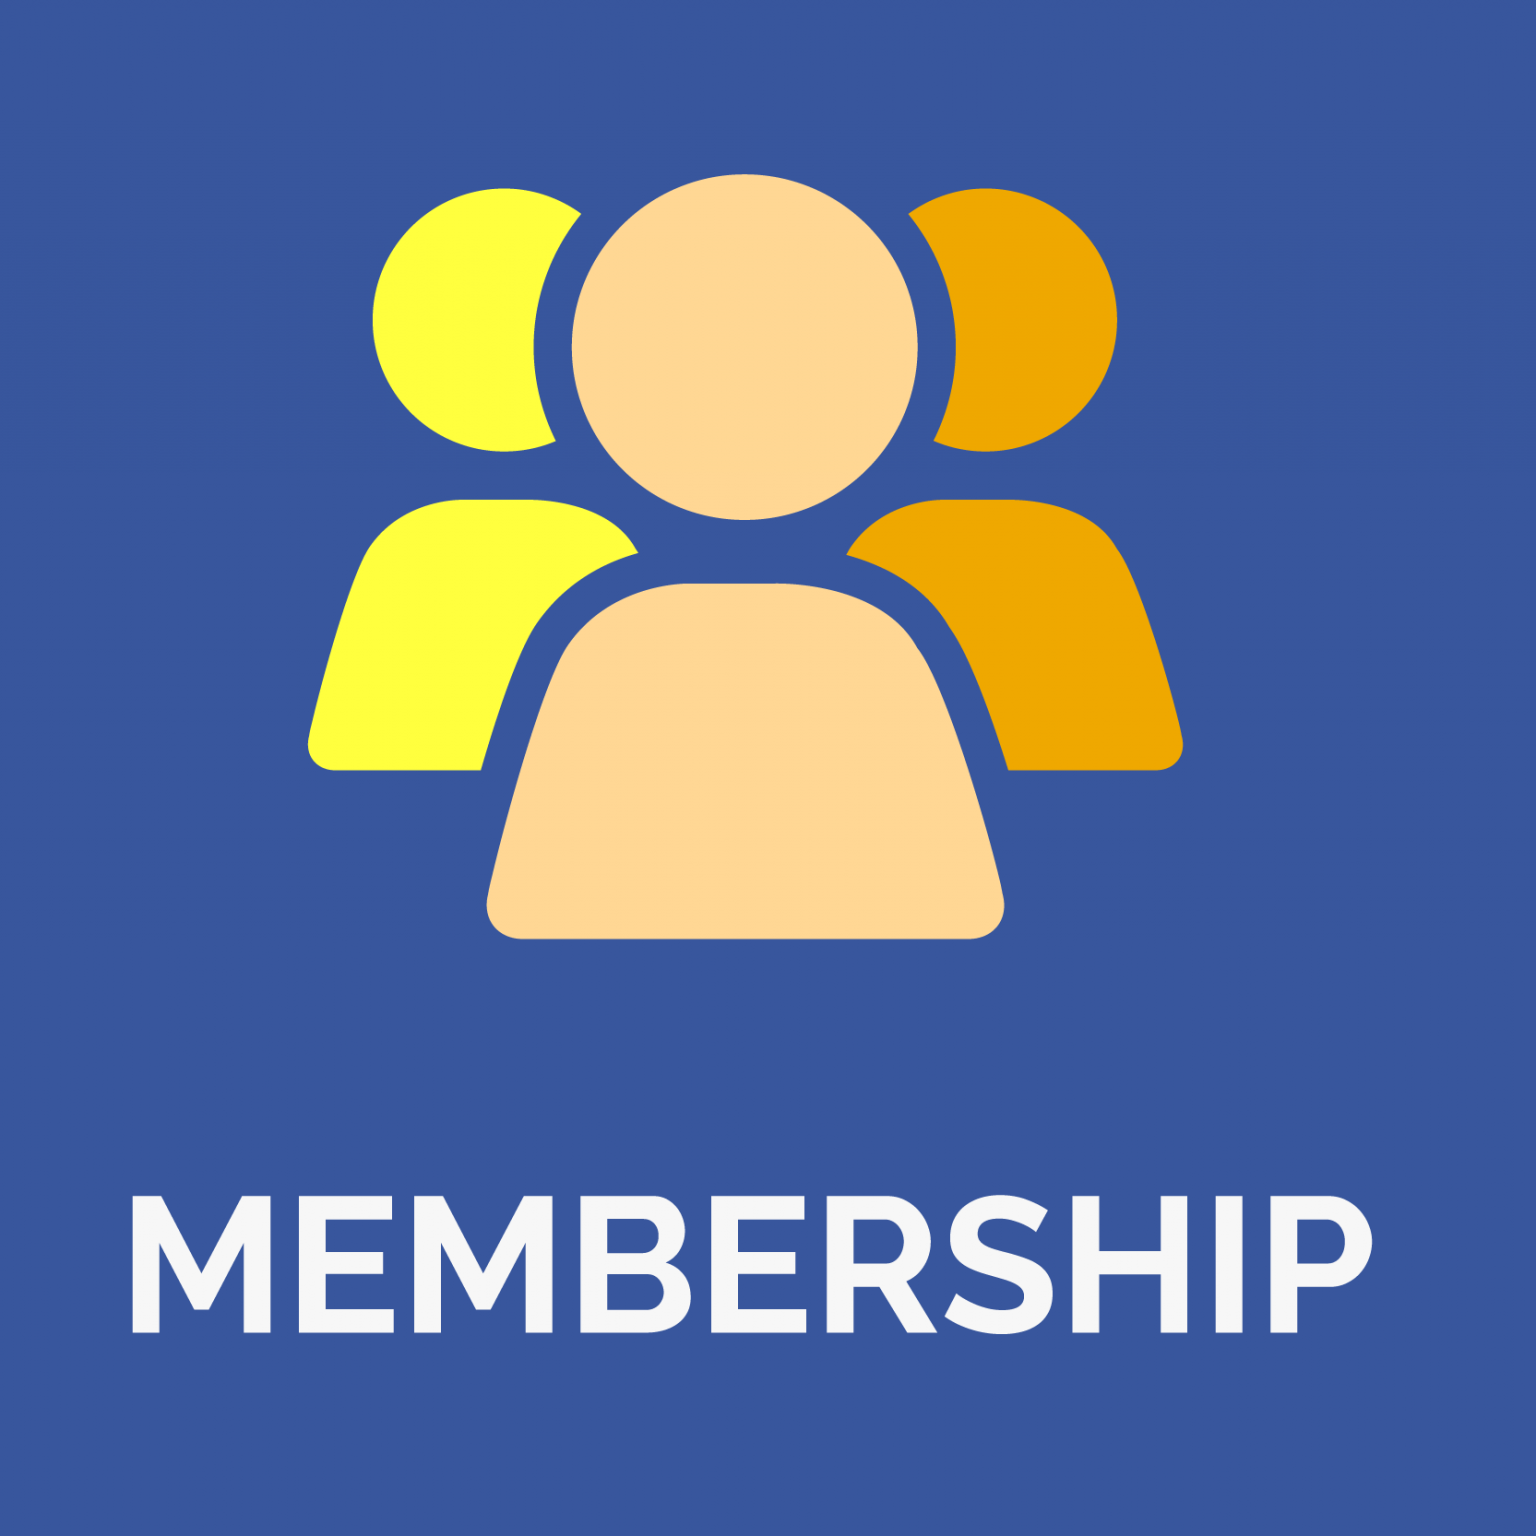 Membership. Membership картинки. Membership реклама. Картинки для детей membership. Member home